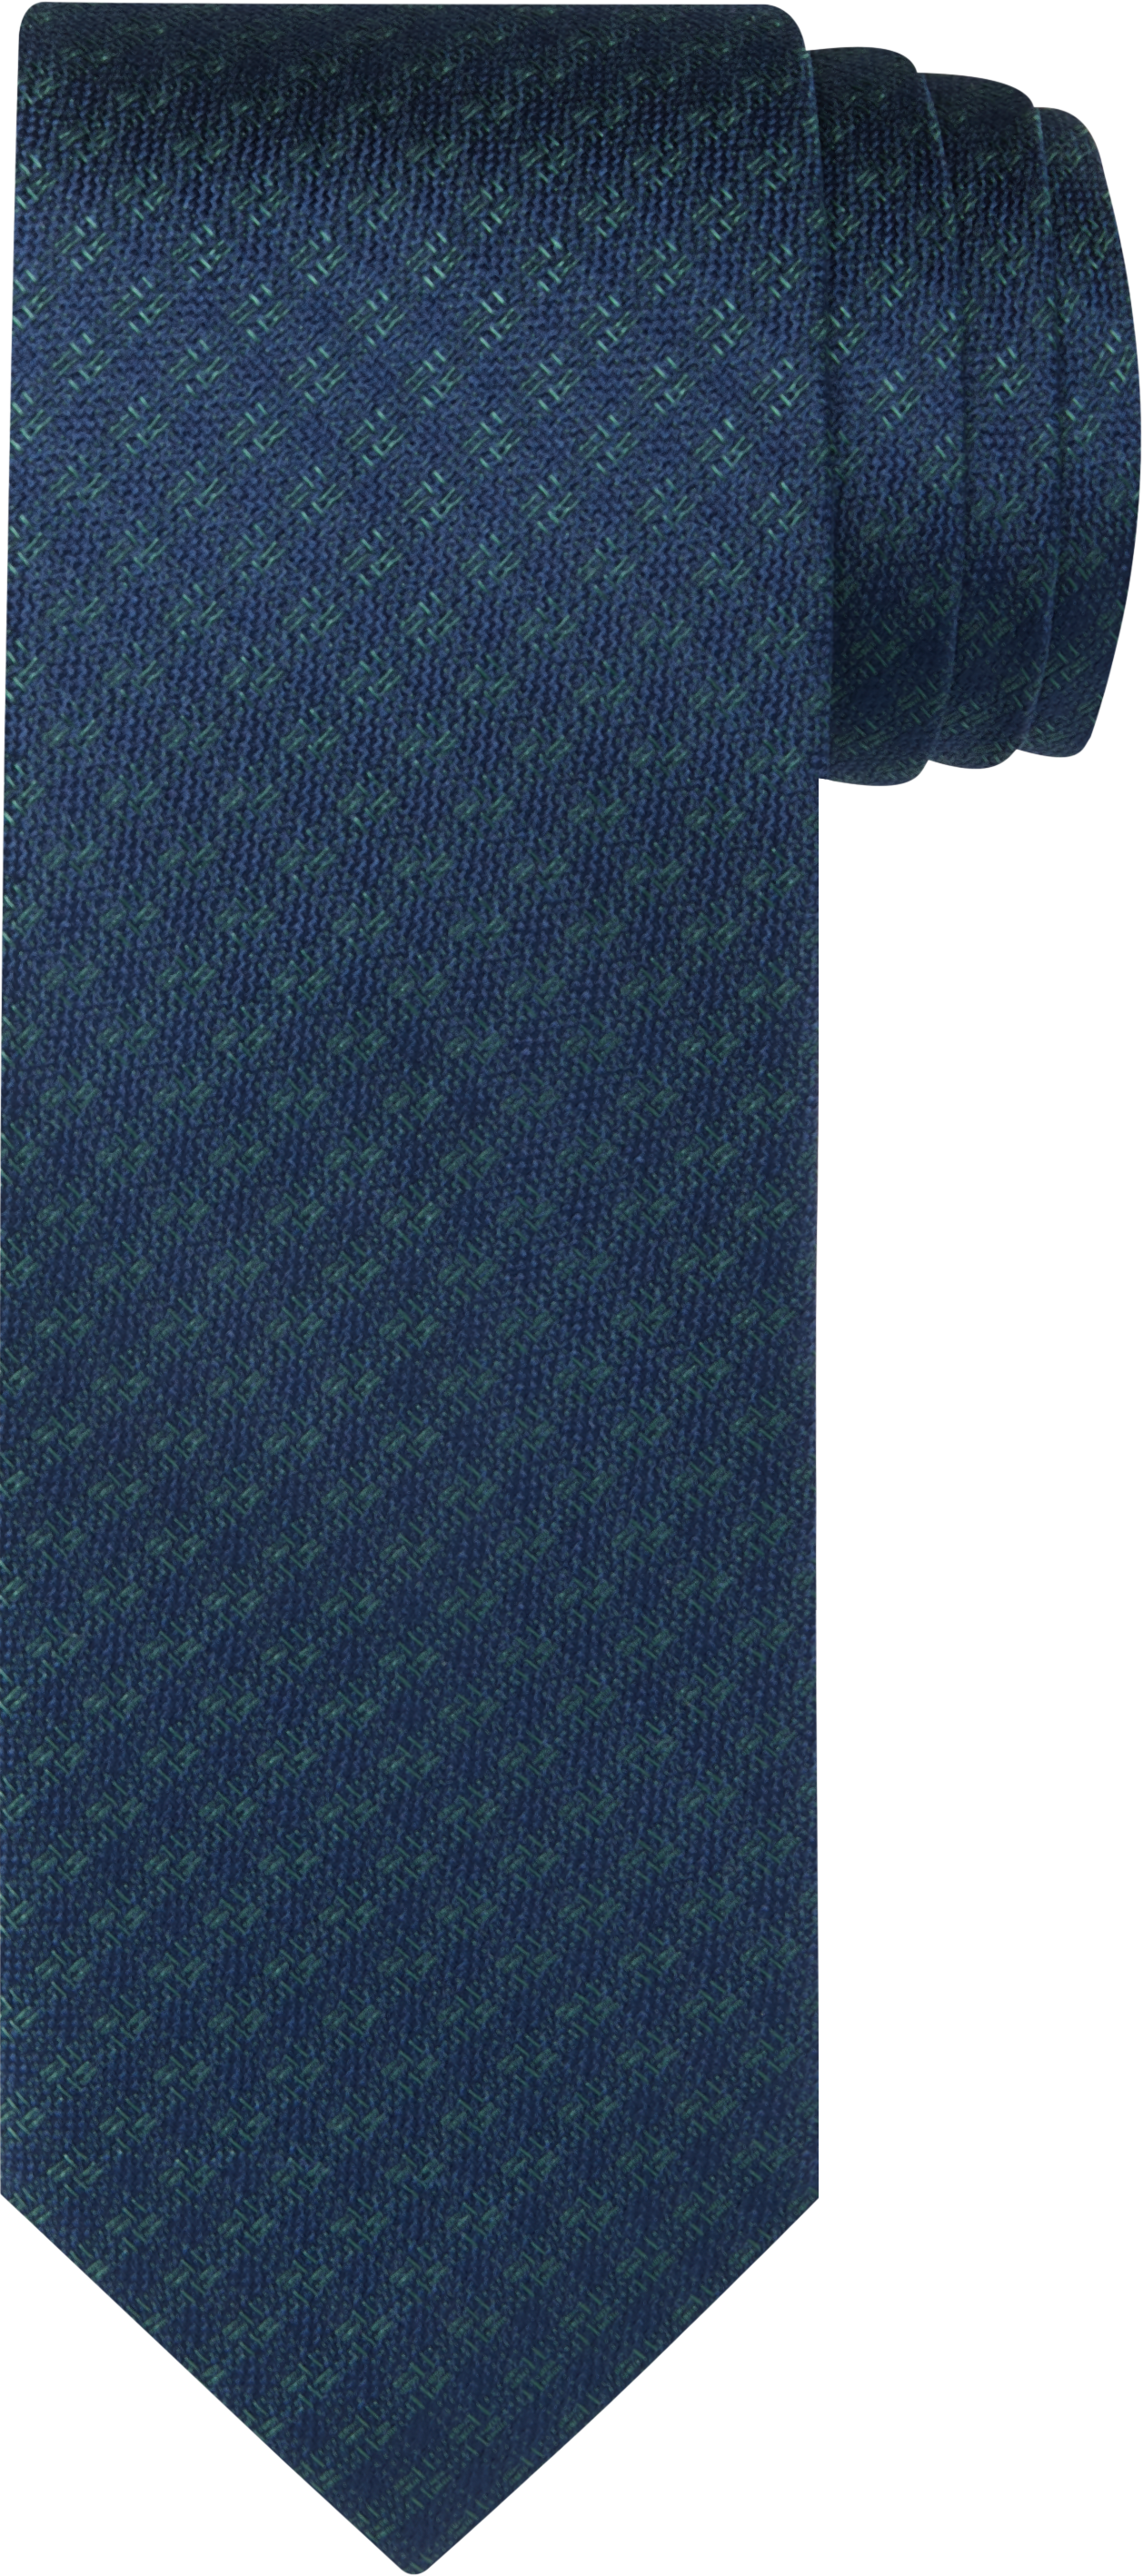 1905 Collection Woven Check Tie - 1905 Ties | Jos A Bank